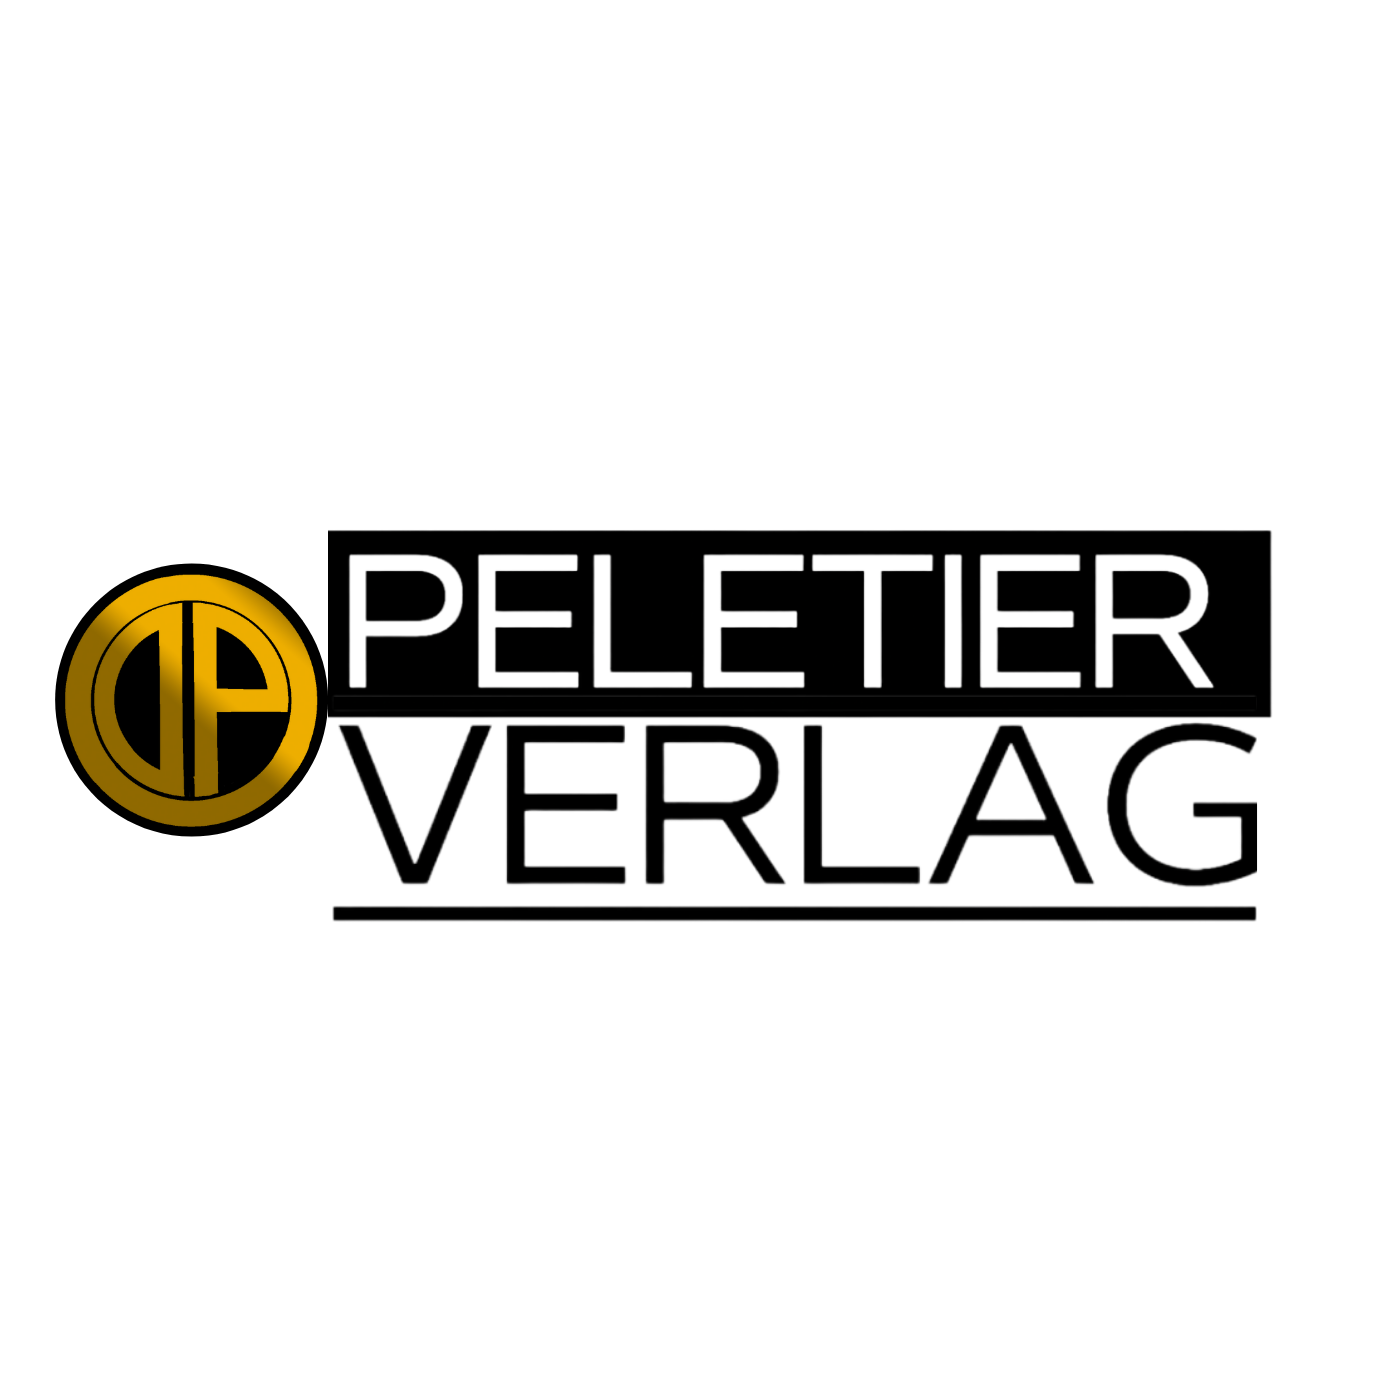 Peletier Verlag